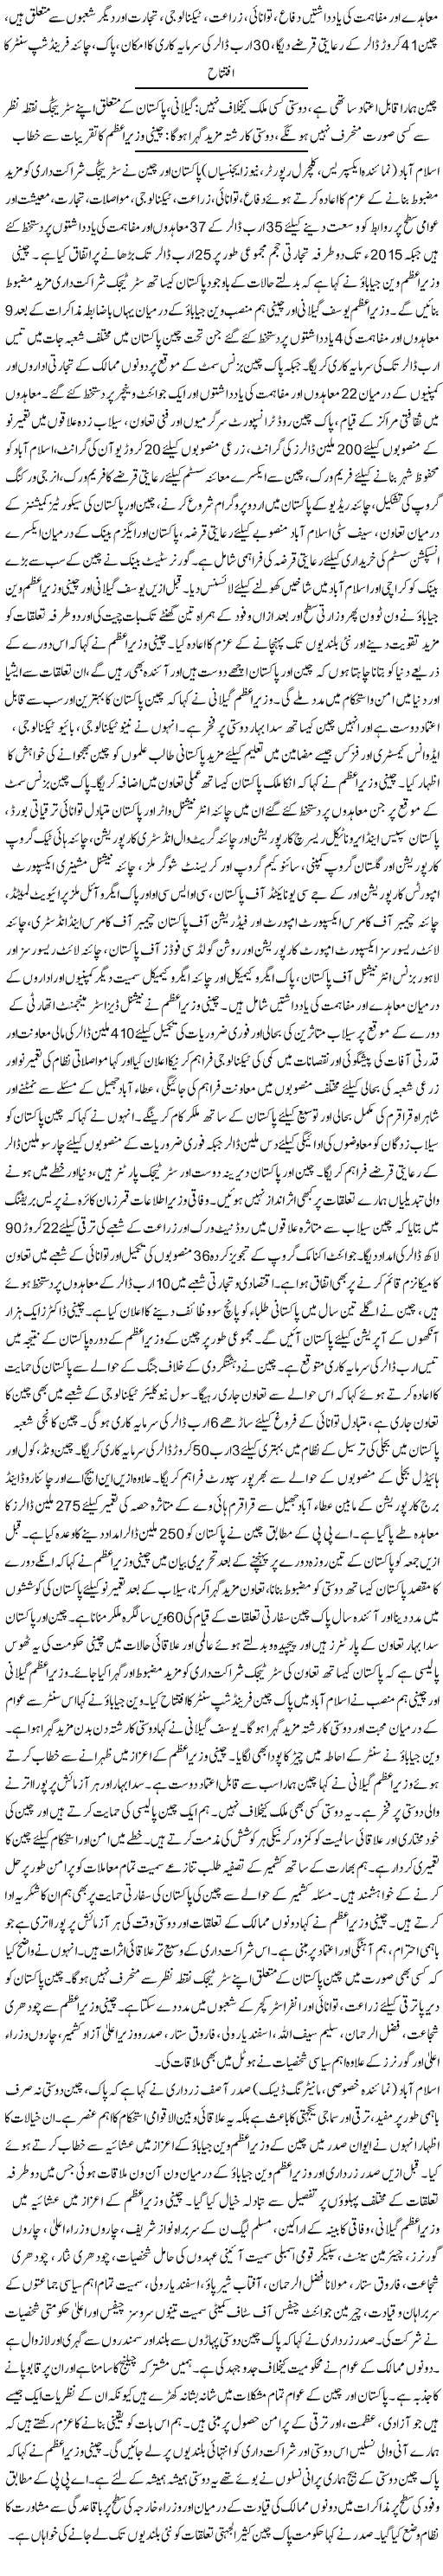 Agreements of $37 Billion  Between Pak-China - Urdu National News